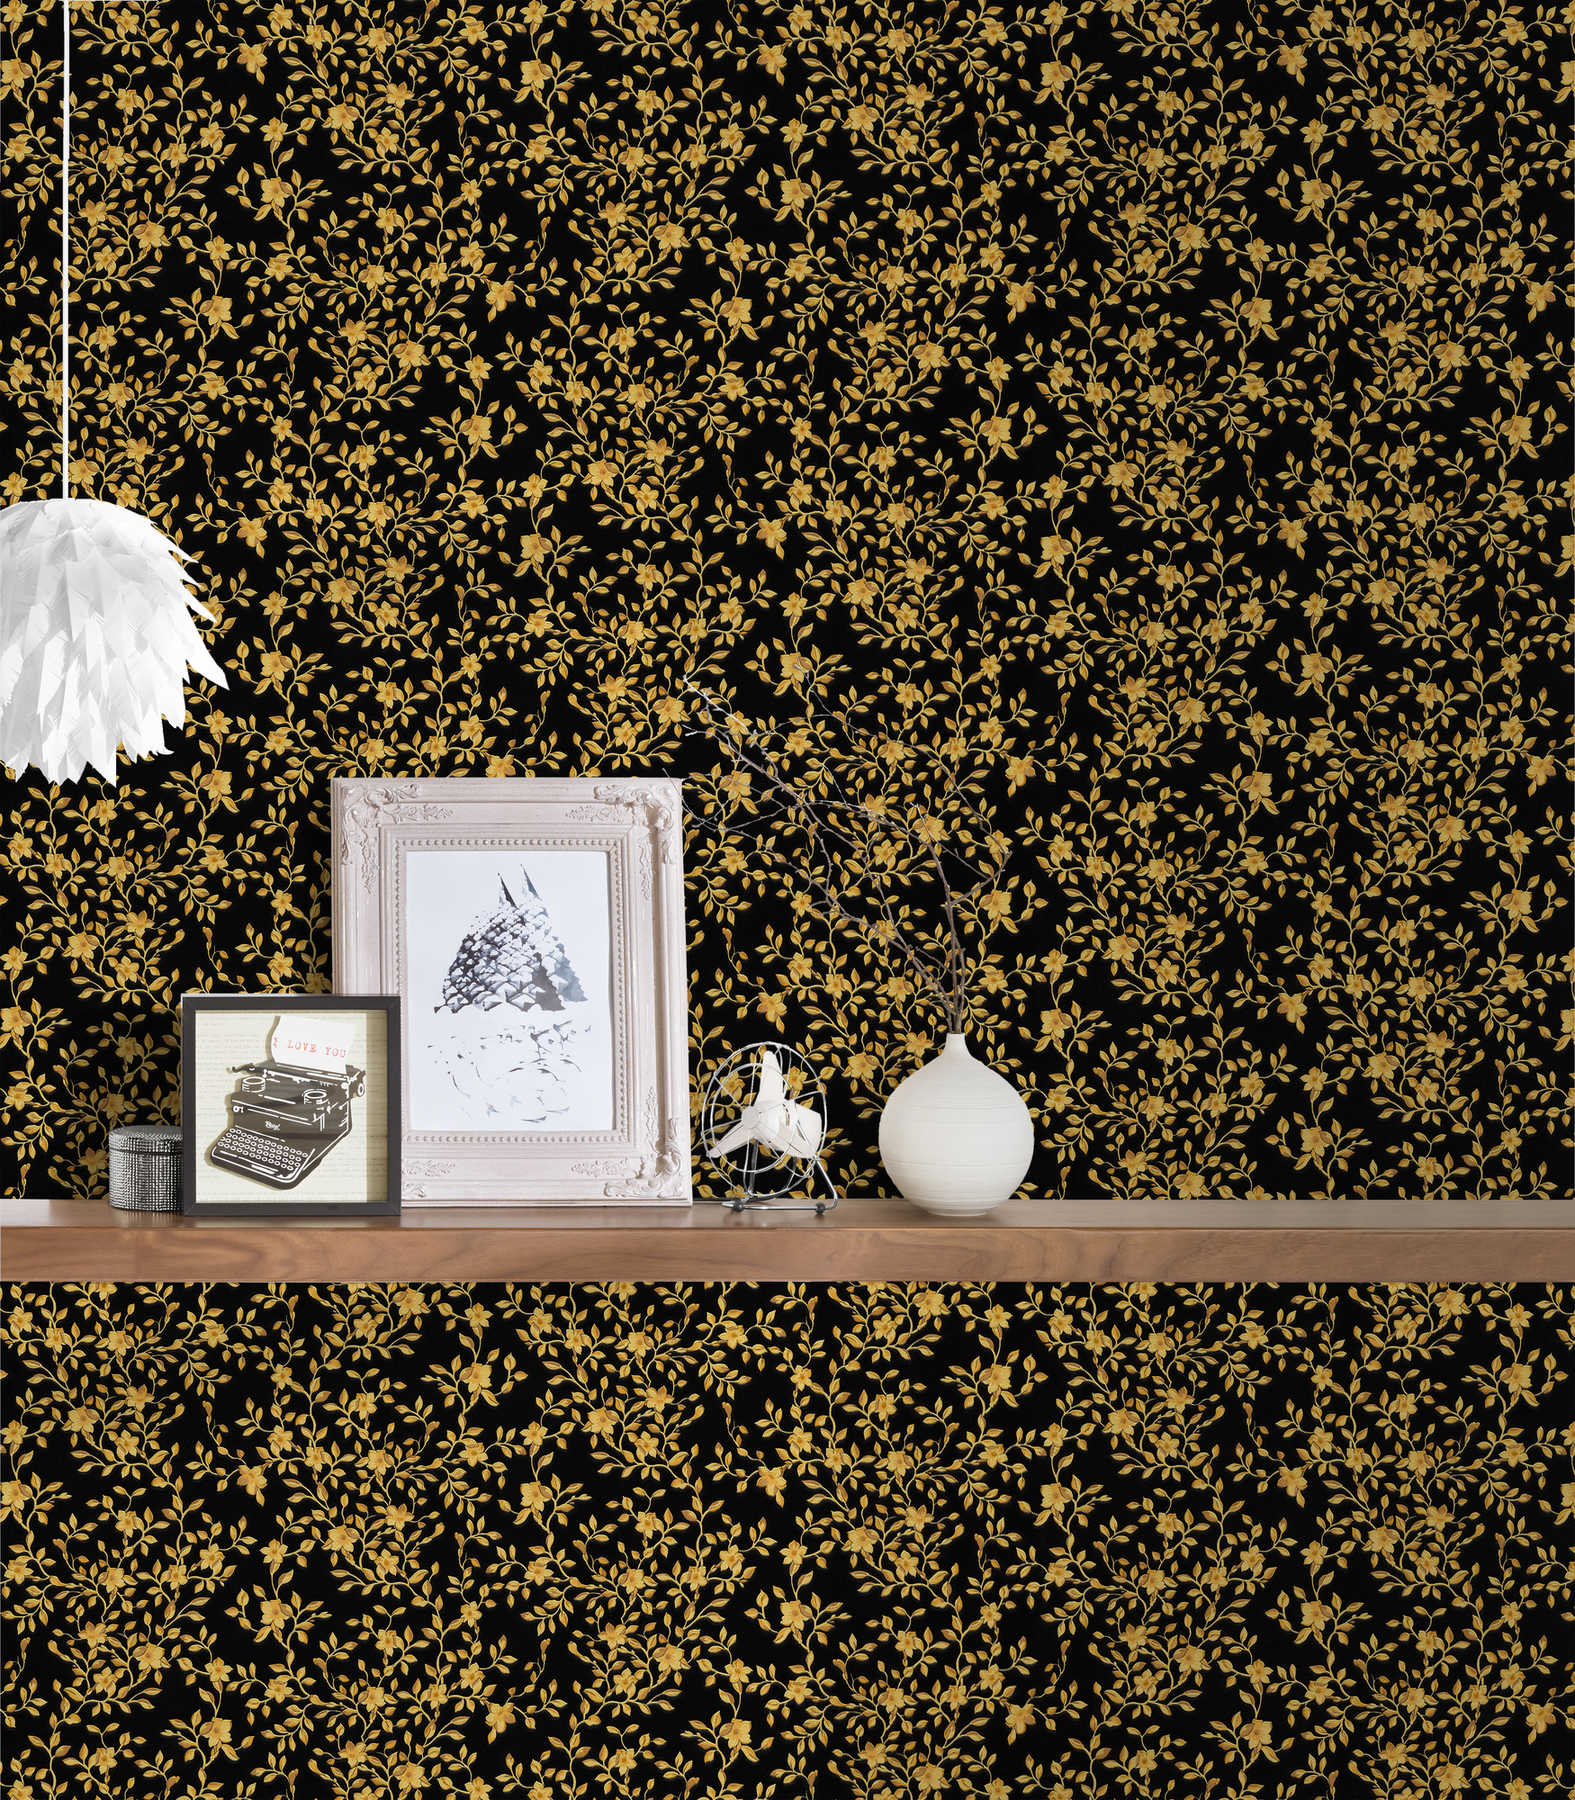             Black VERSACE wallpaper with gold leaves & flower vines
        